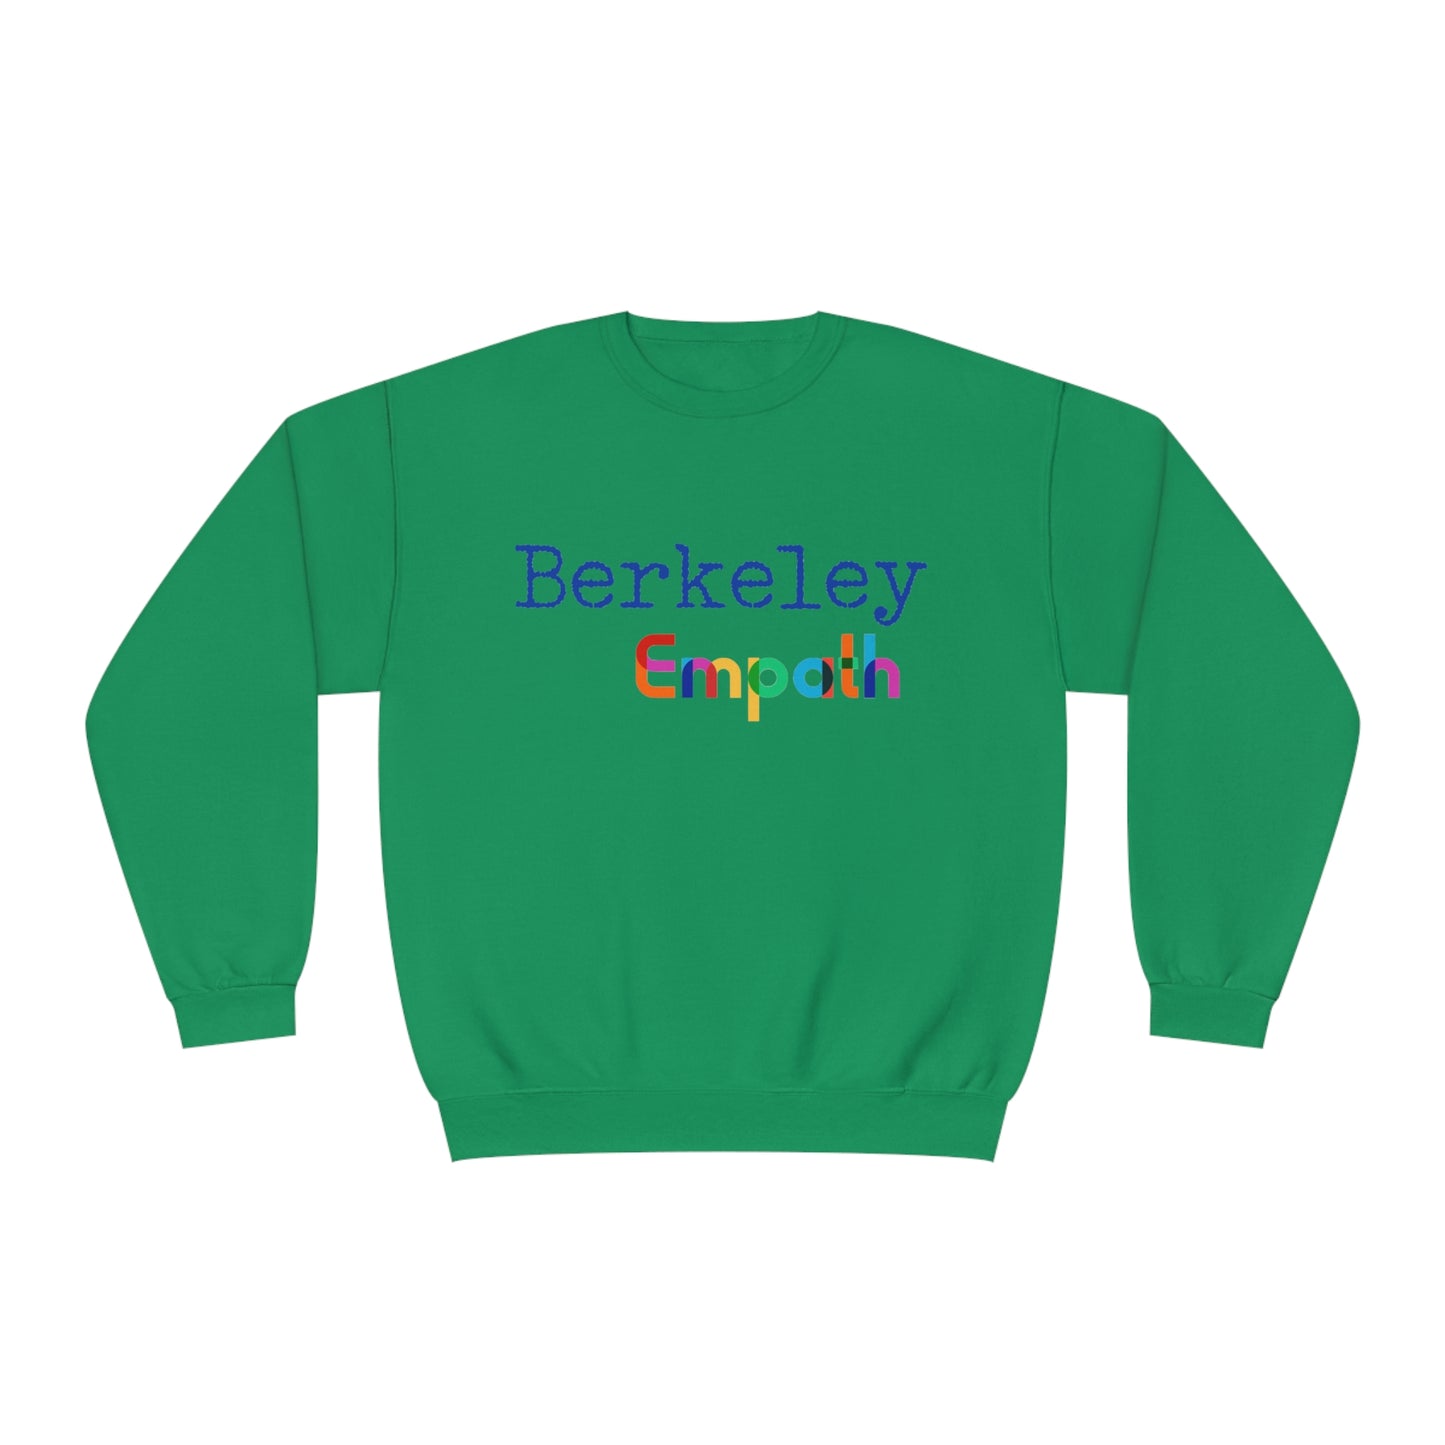 Berkeley Empath Unisex NuBlend Crewneck Sweatshirt